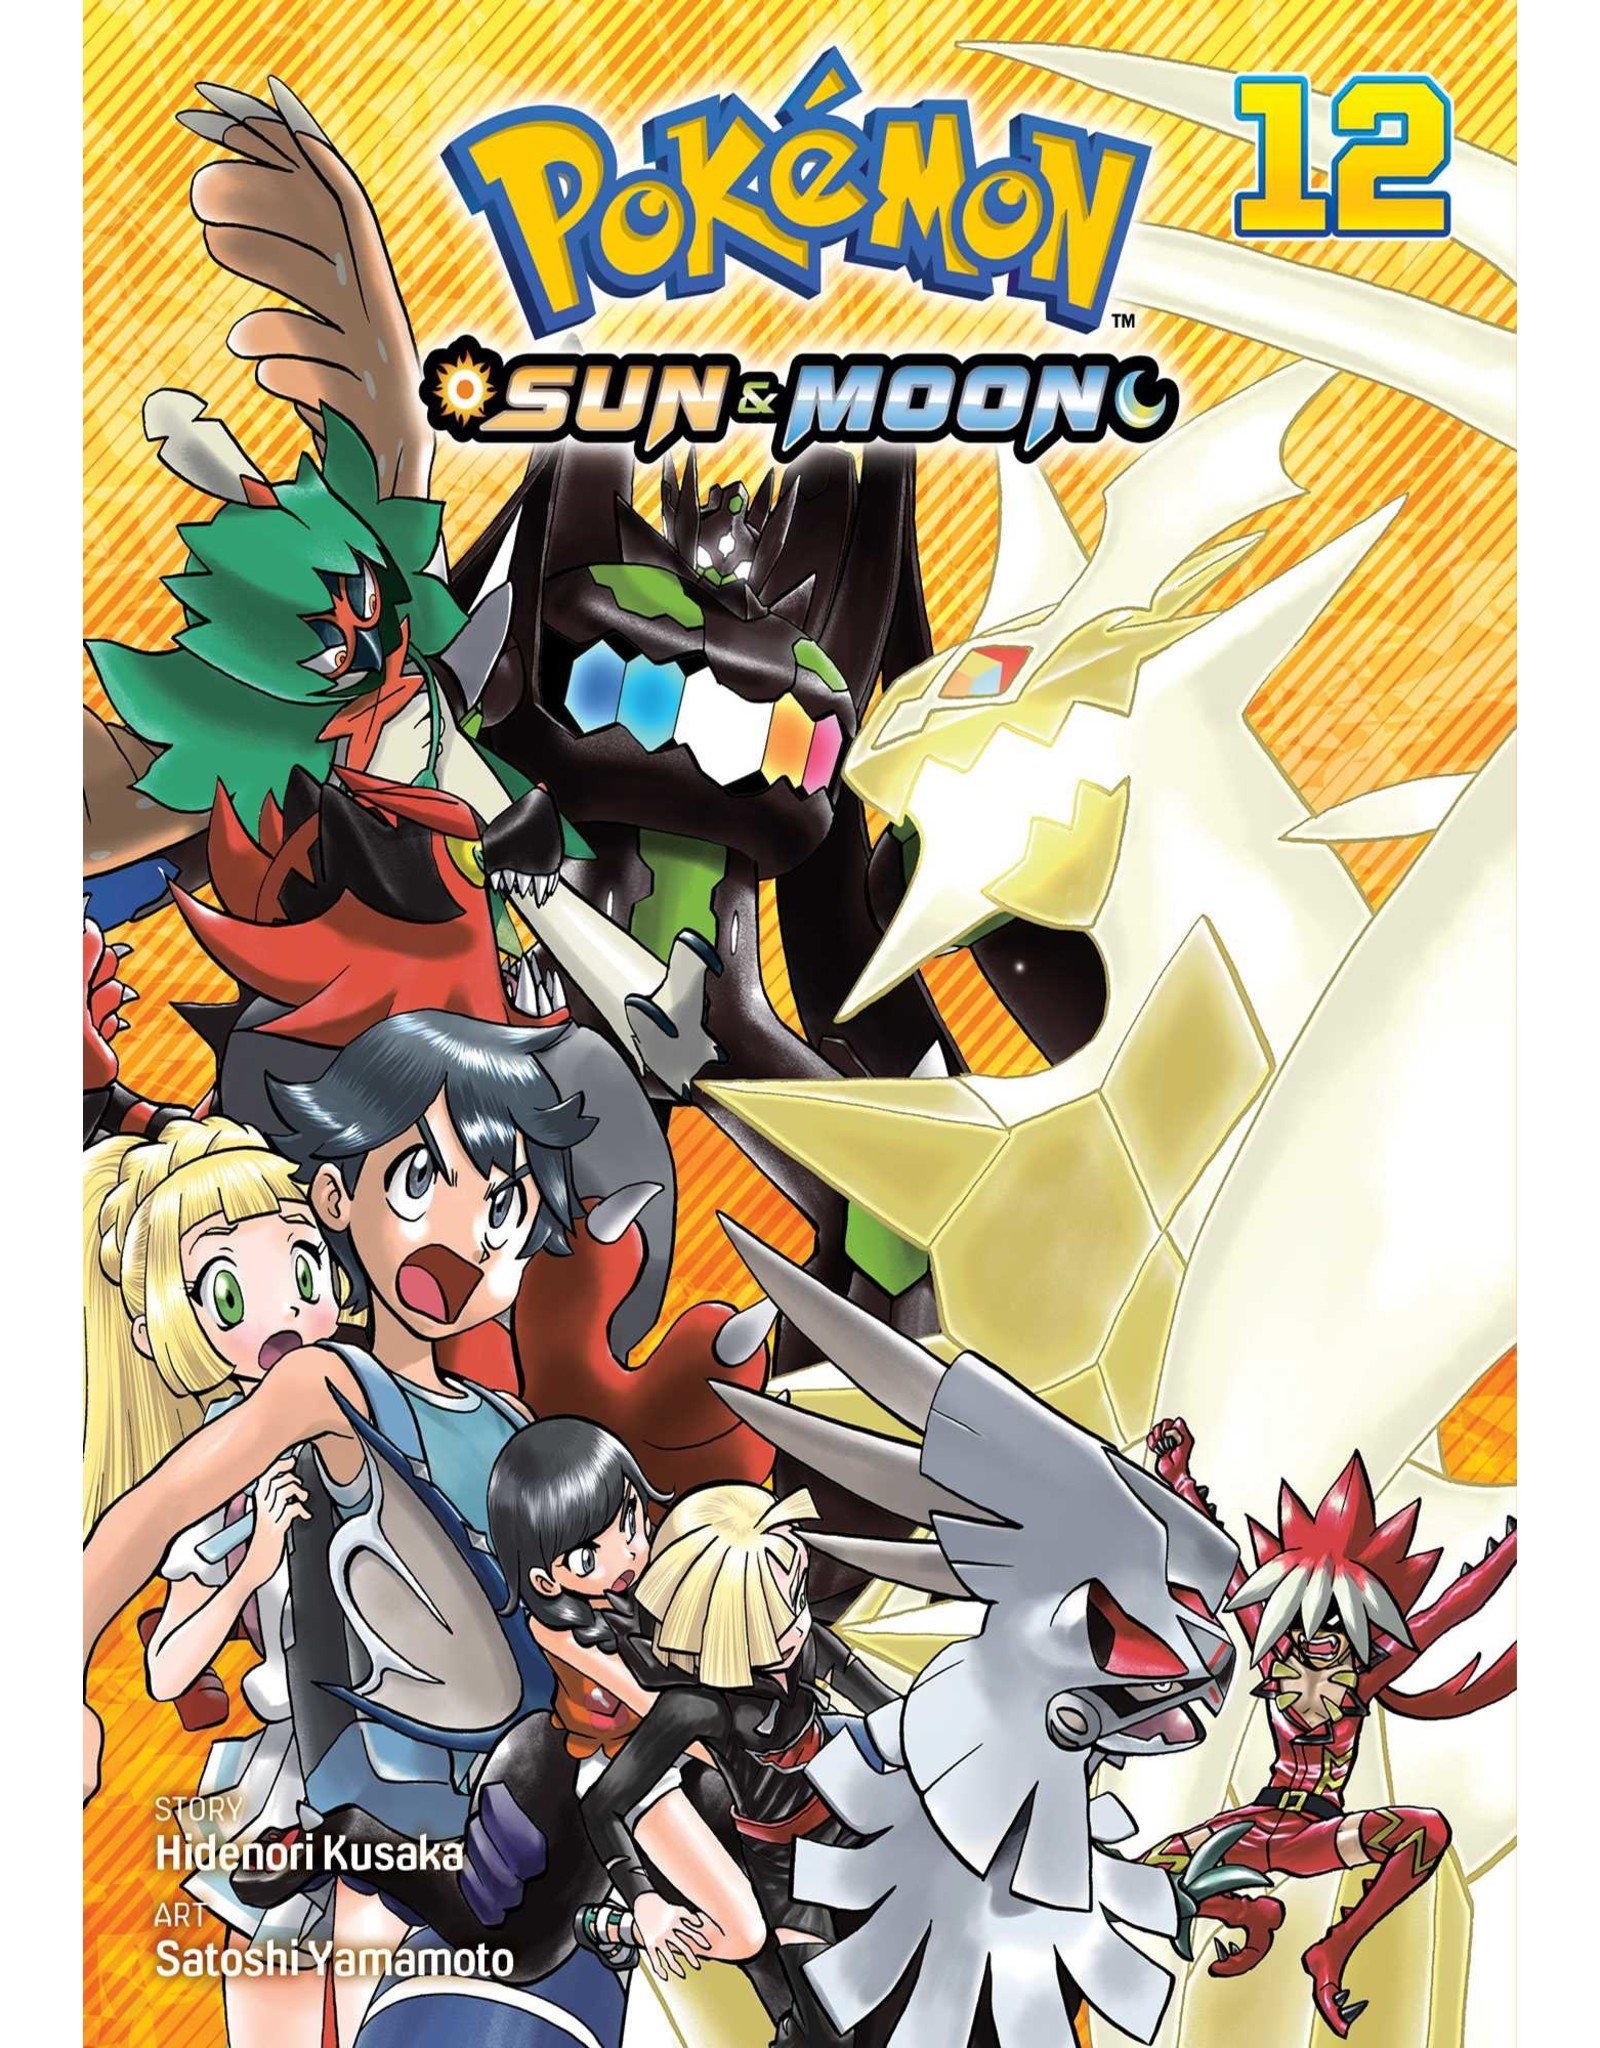 Pokémon Sun & Moon 12 (English) - Manga